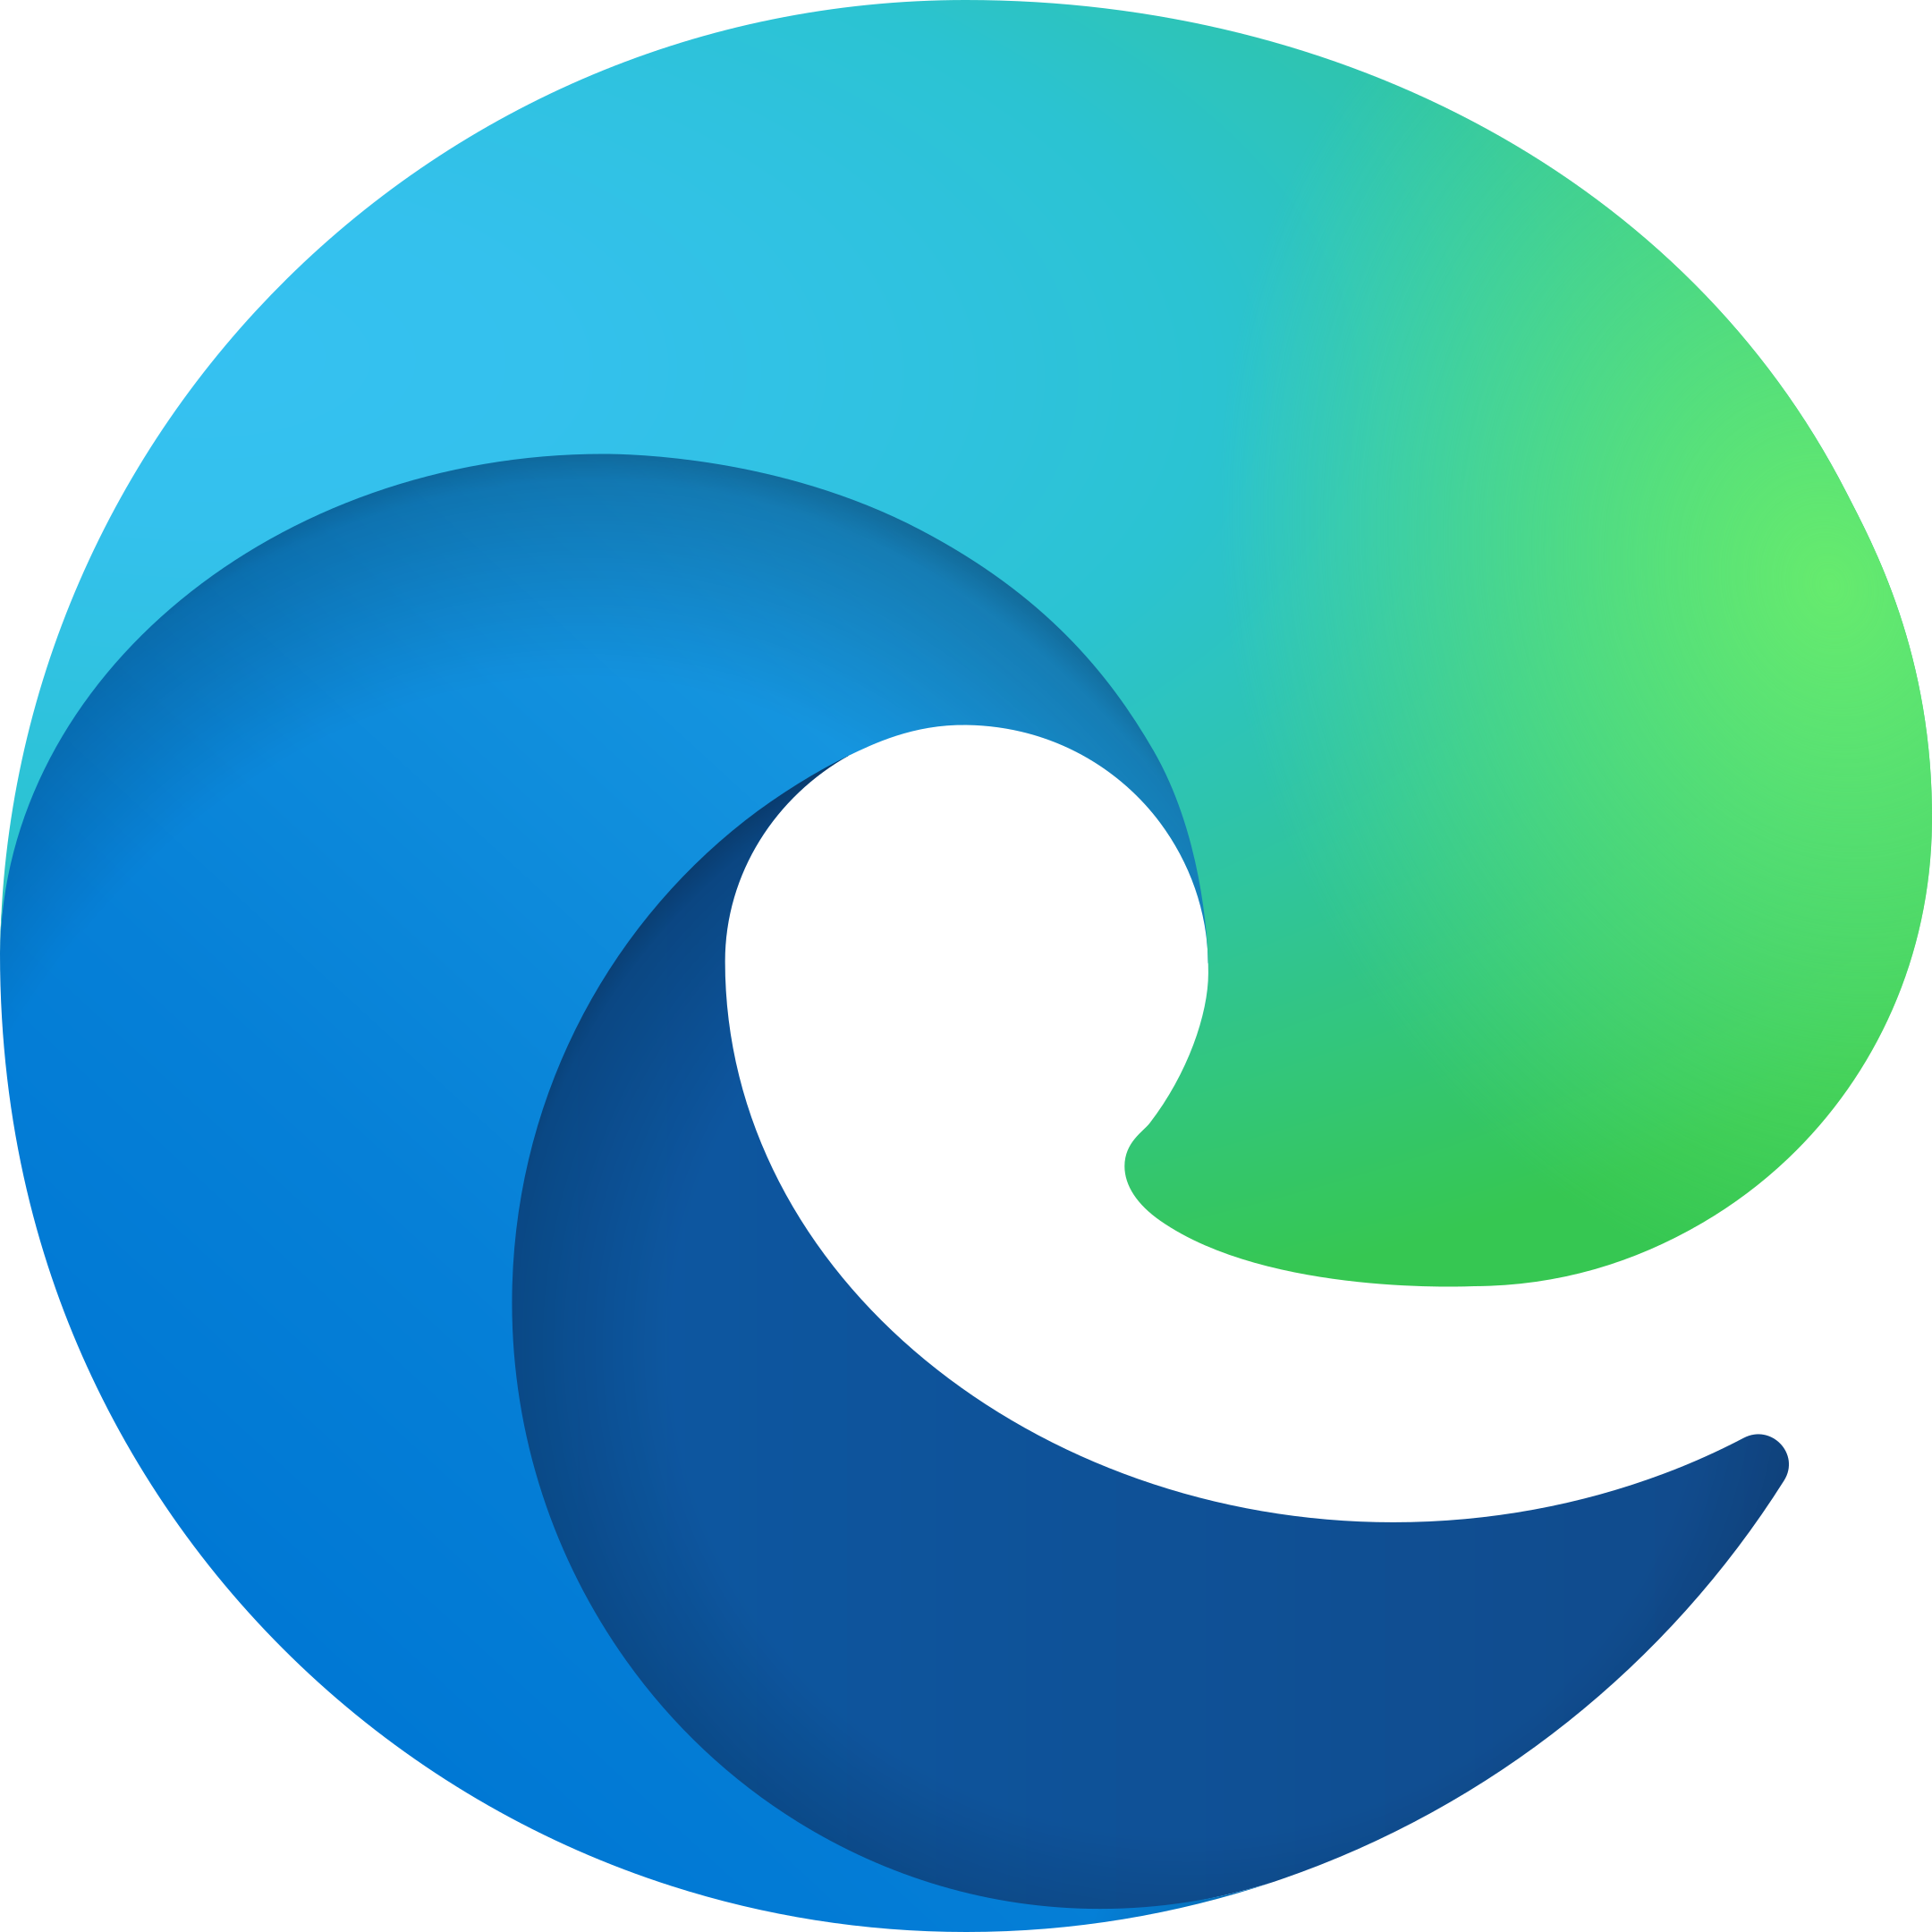 microsoft edge logo 1 1 - Microsoft Edge Logo